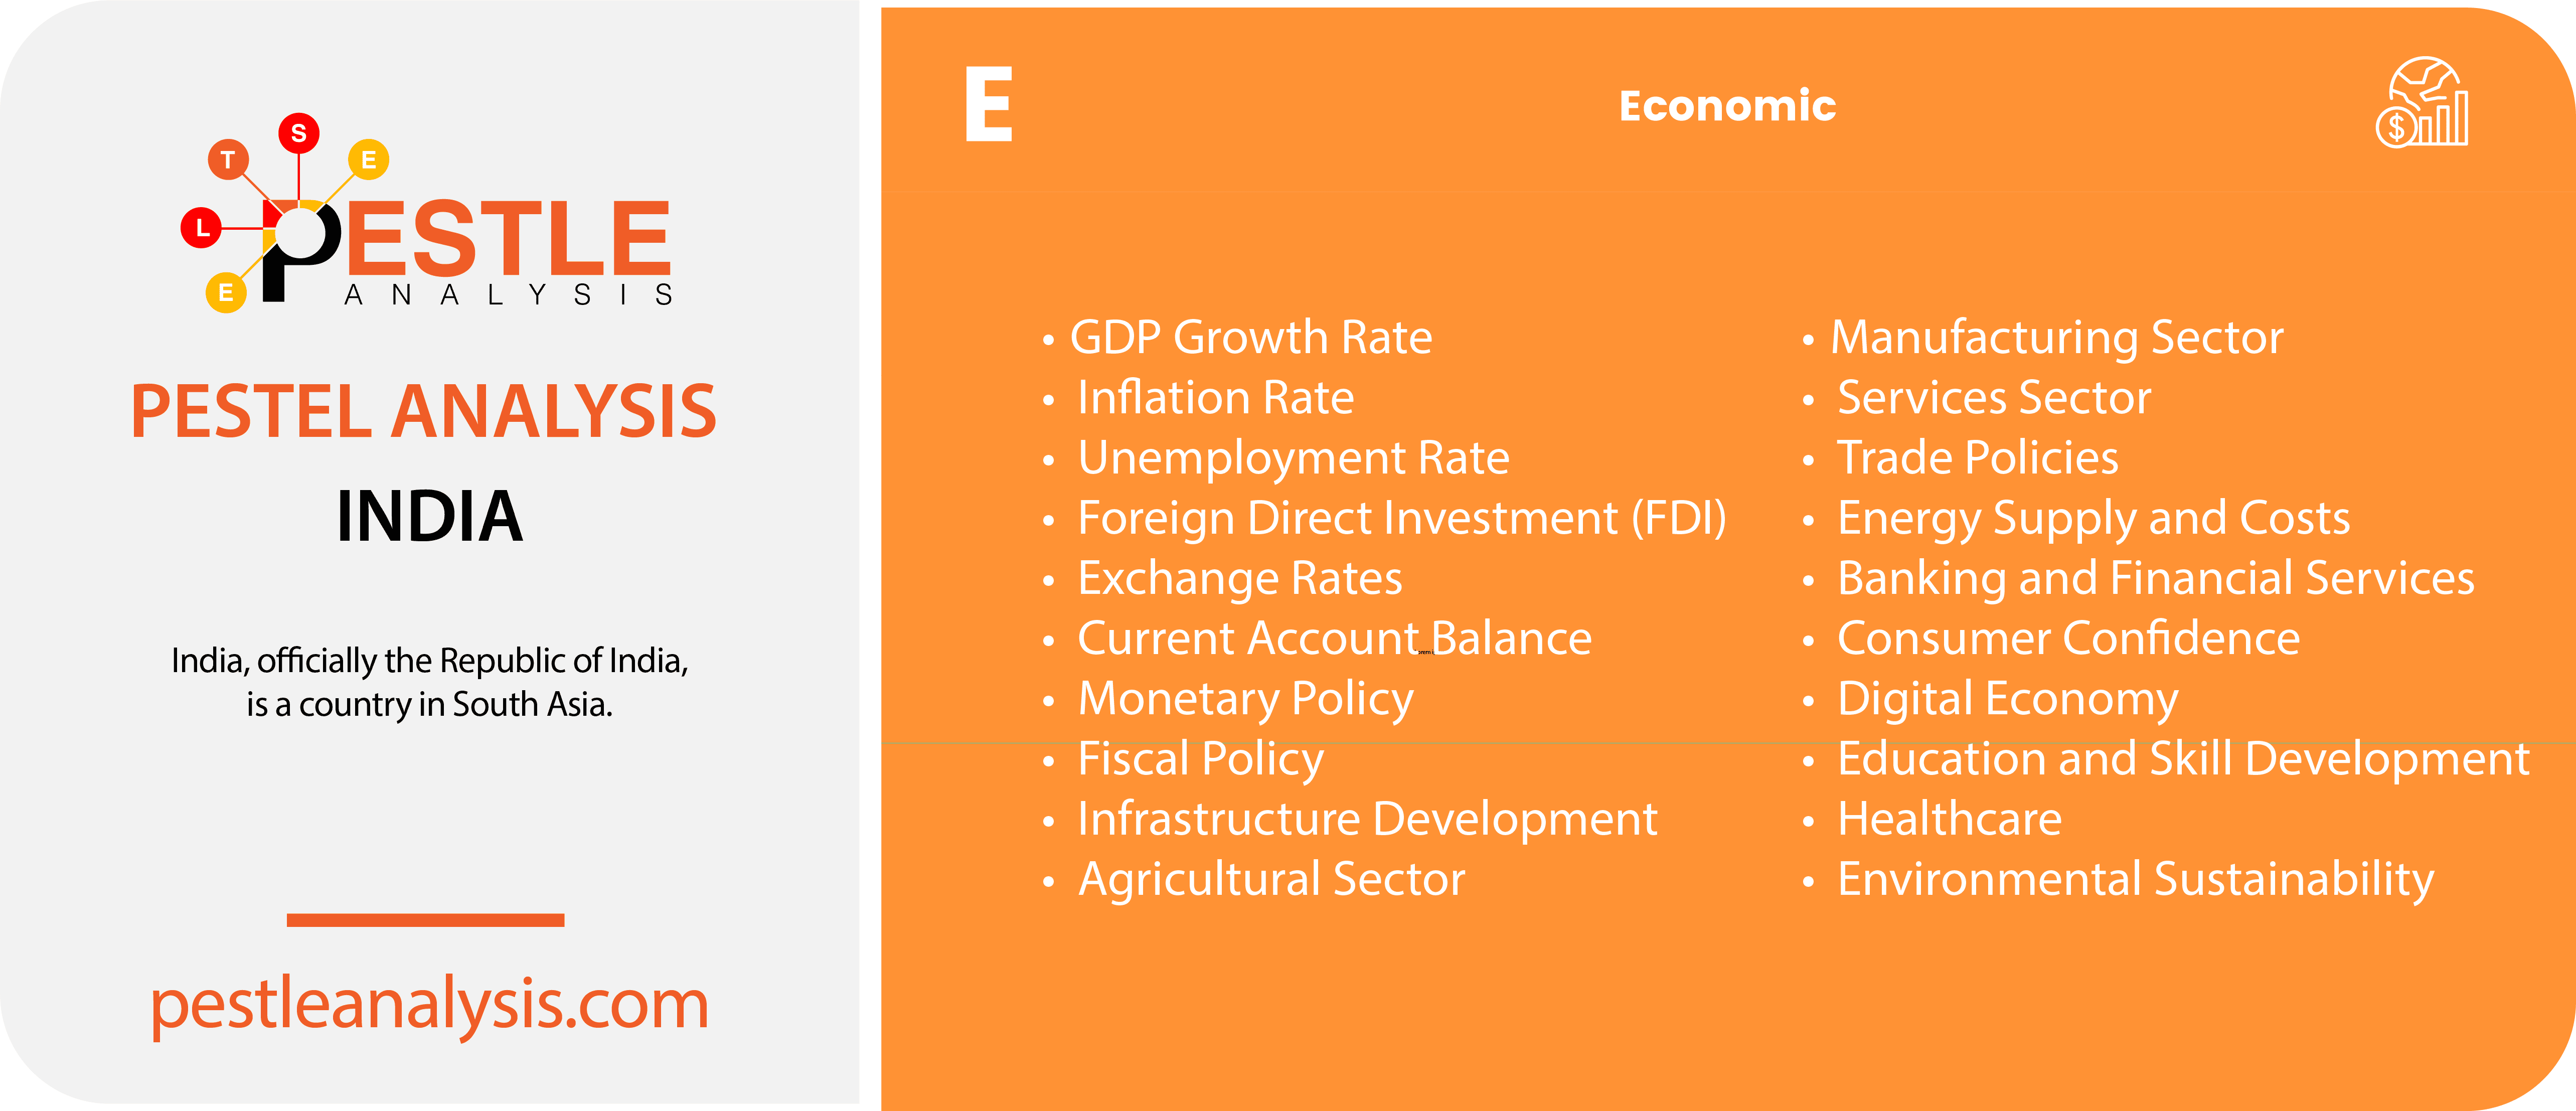 india-pestle-analysis-economic-factors-template